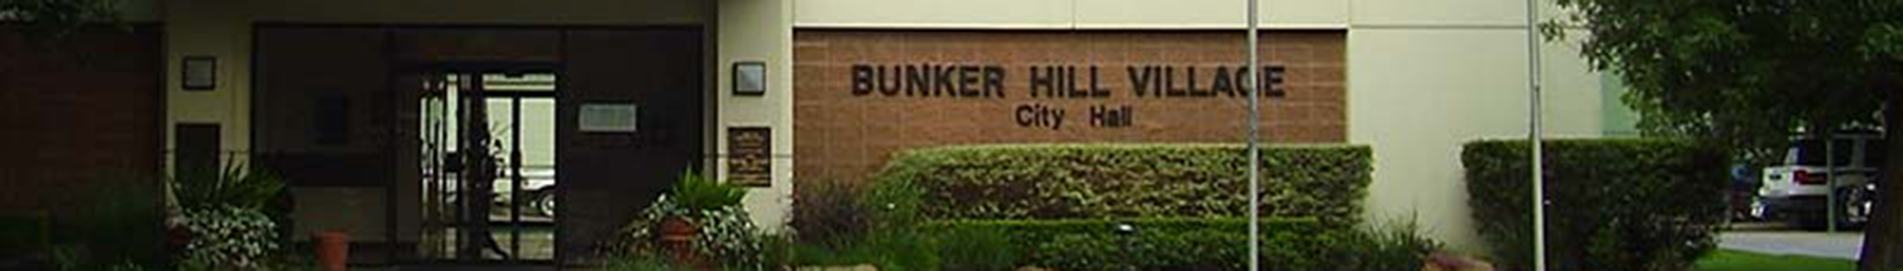 Bunker Hill Village